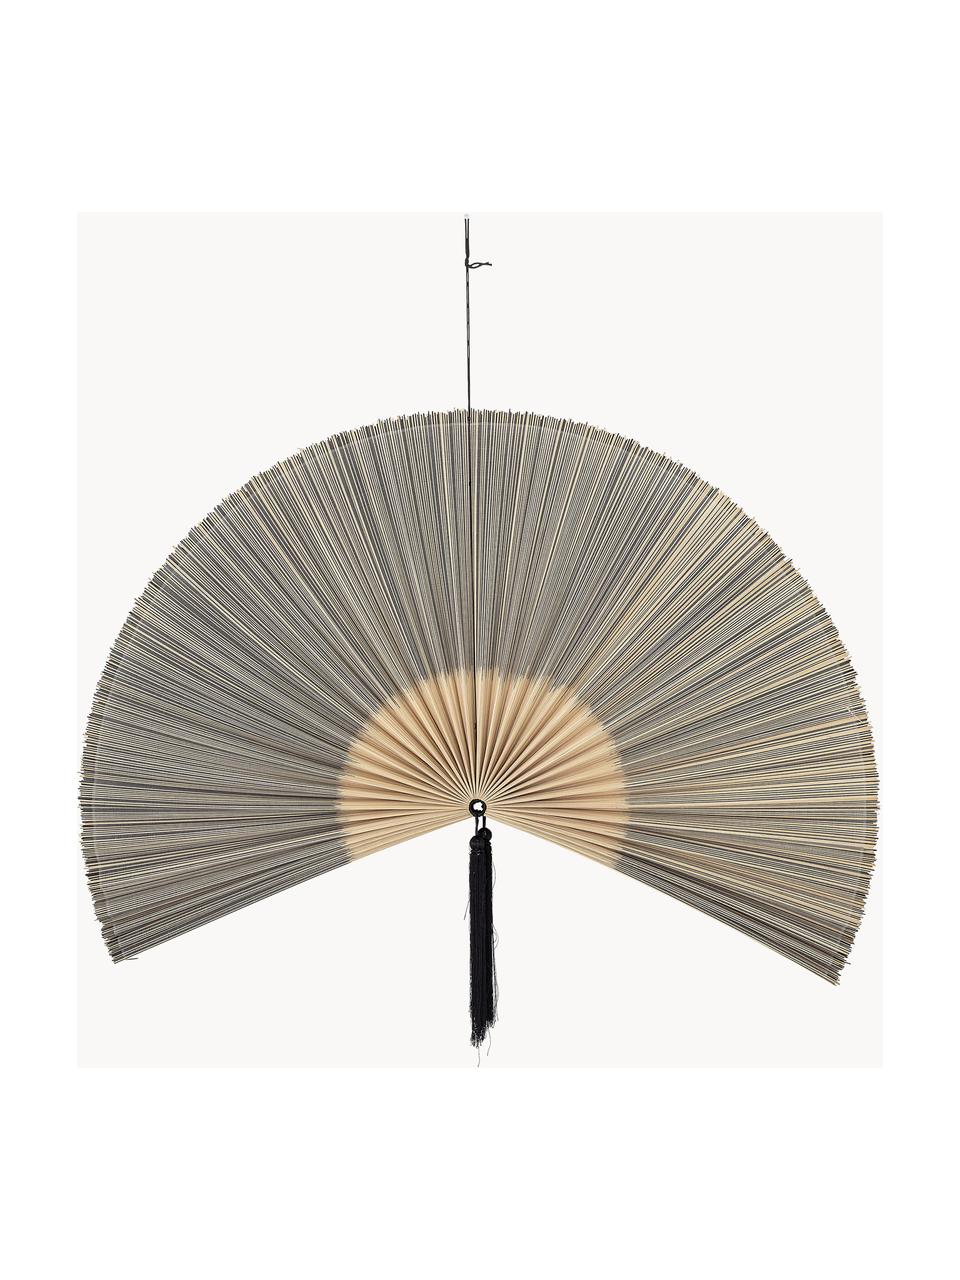 Nástěnná dekorace z bambusu Jaime, Bambus, bavlna, Odstíny béžové, Š 145 cm, V 72 cm